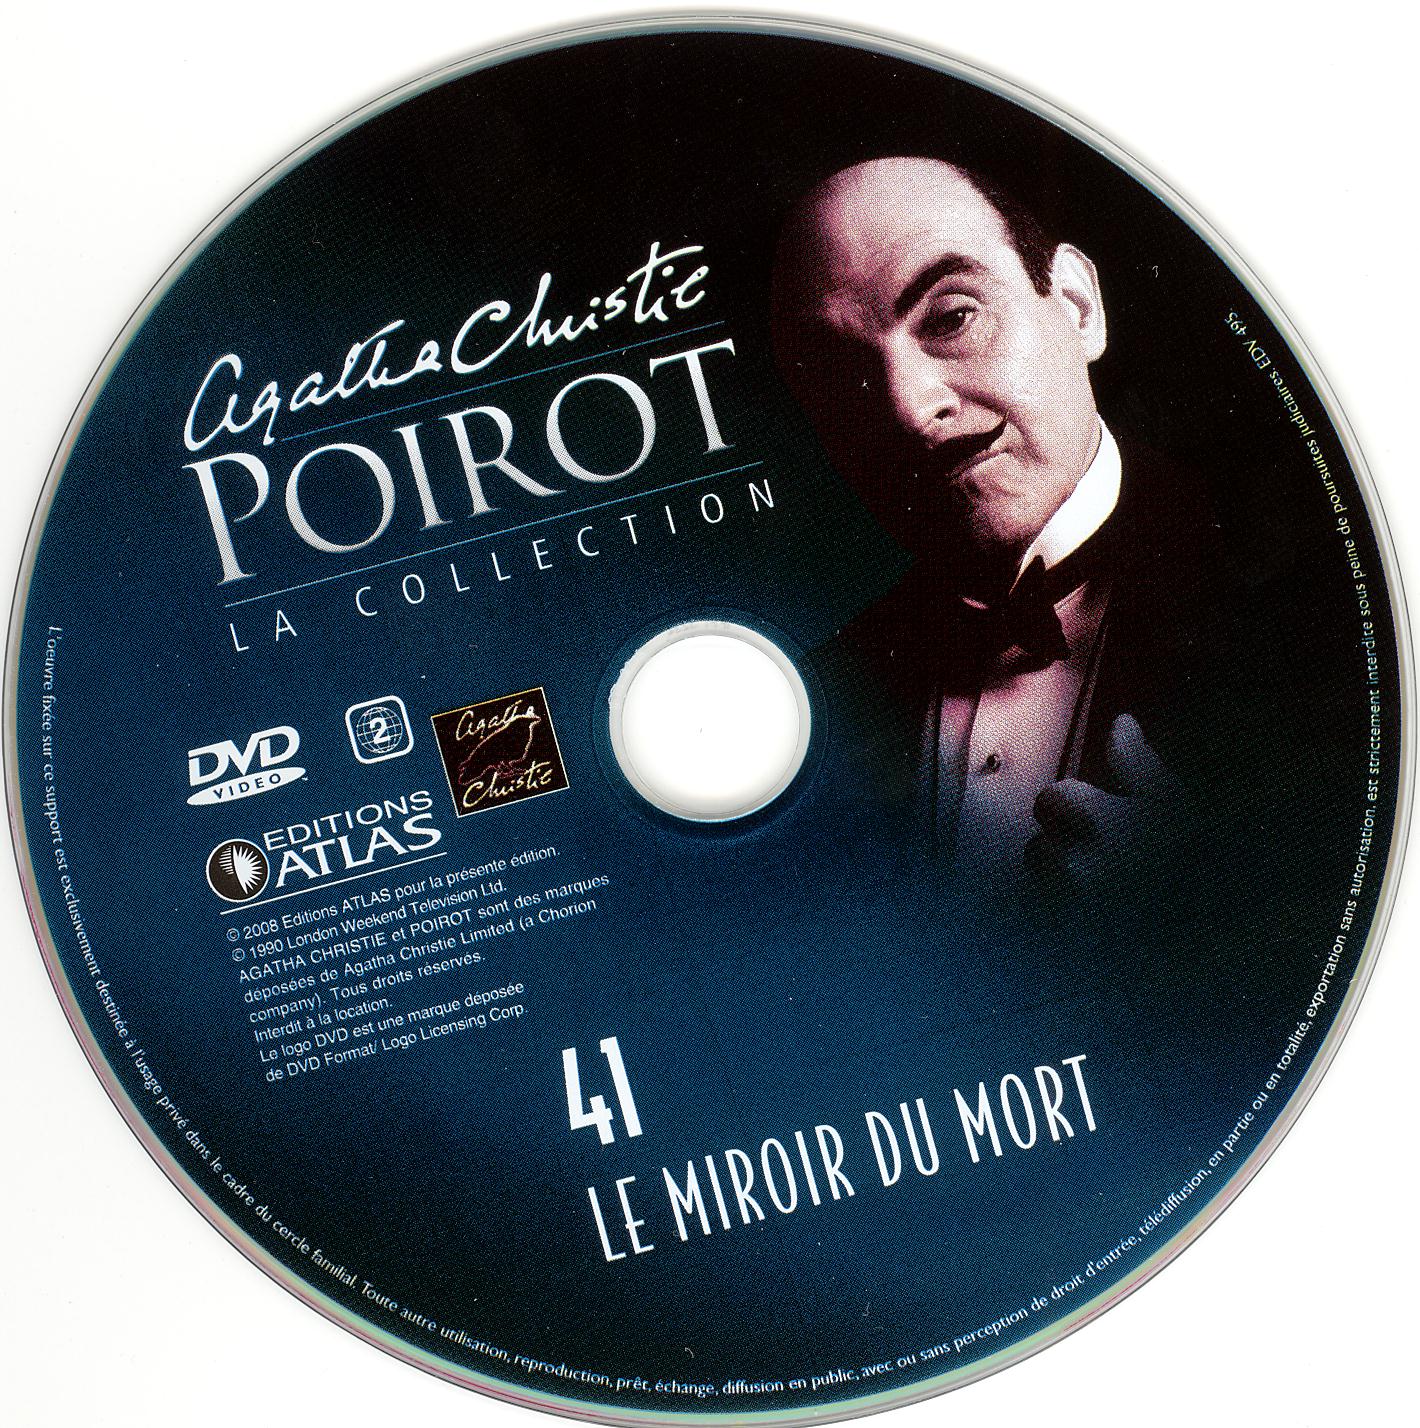 Hercule Poirot vol 41